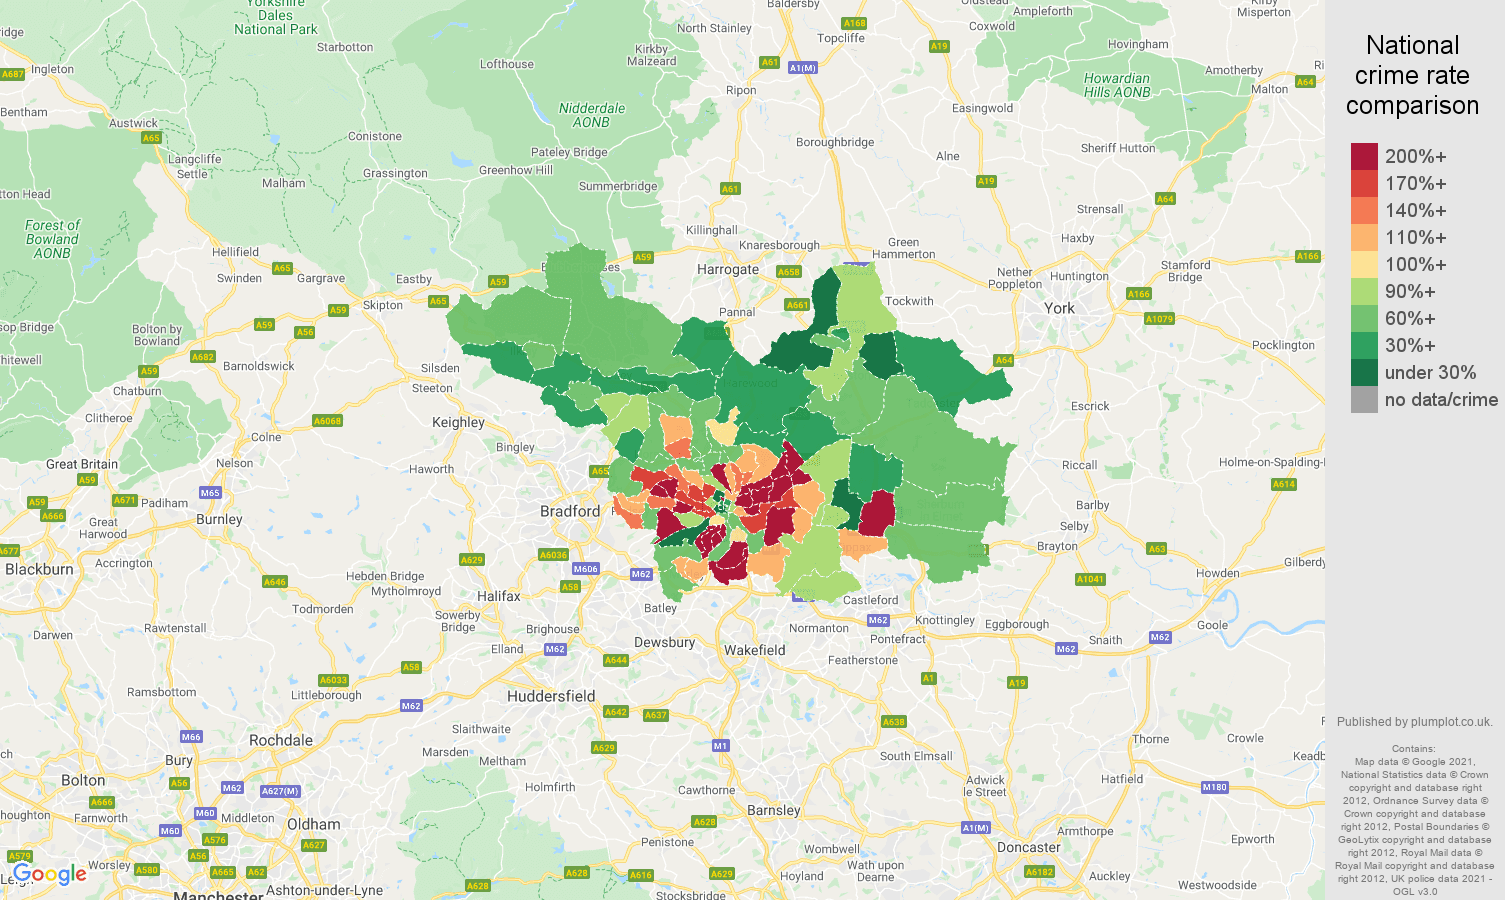 Leeds criminal damage and arson crime rate comparison map